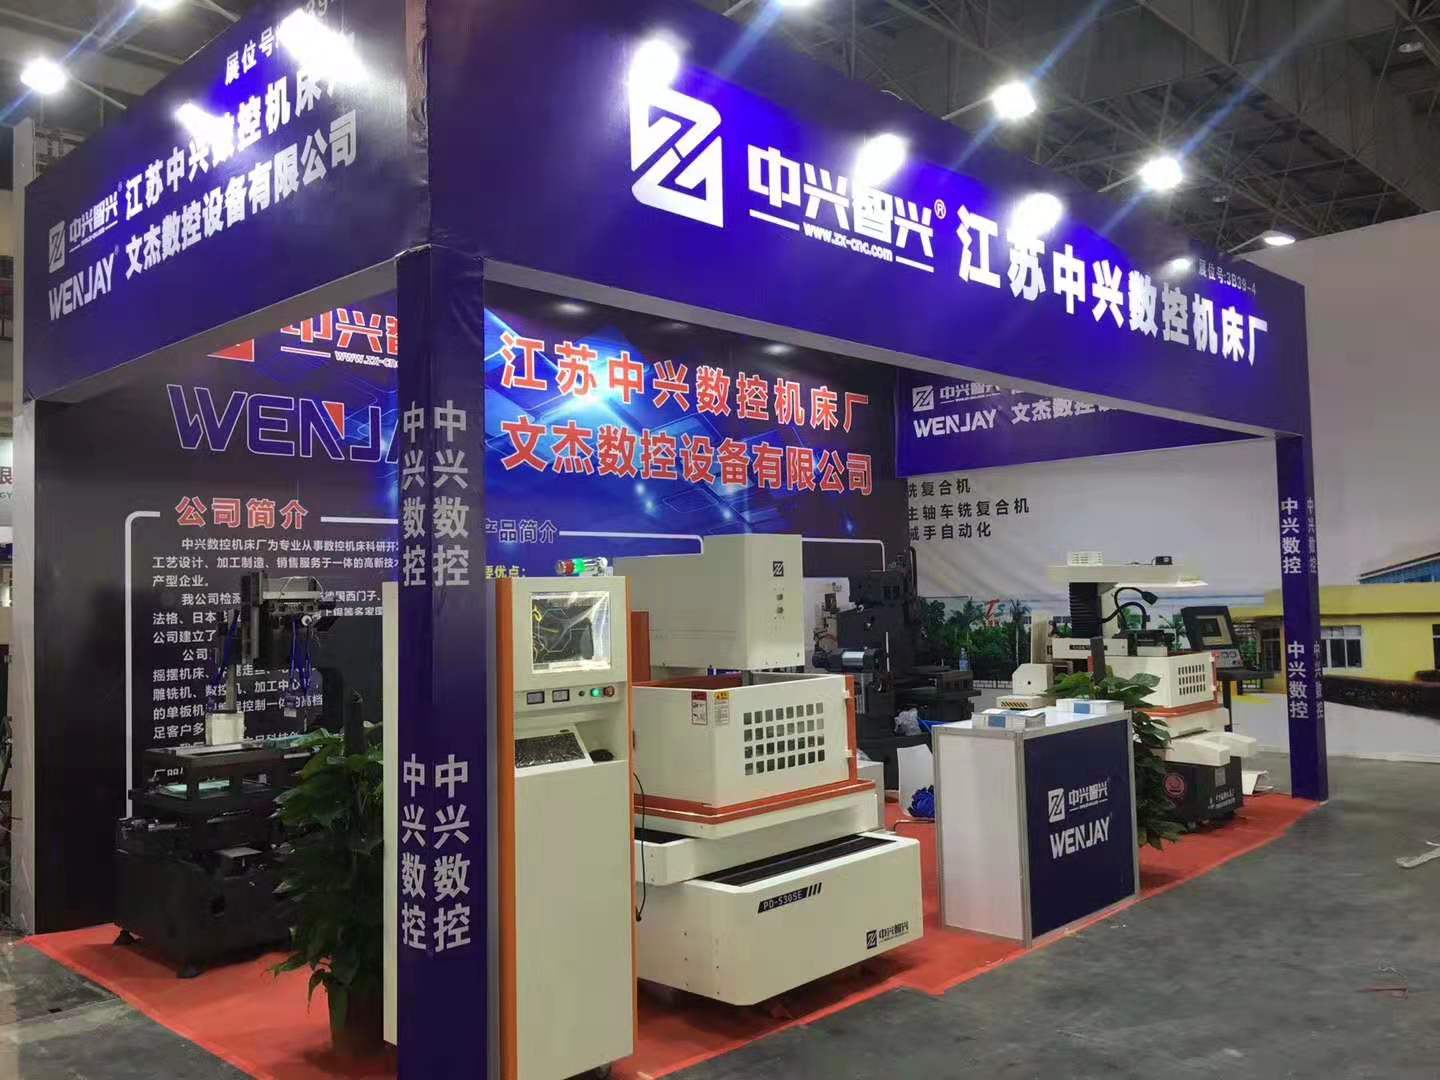 China Dongguan Machinery Exhibition